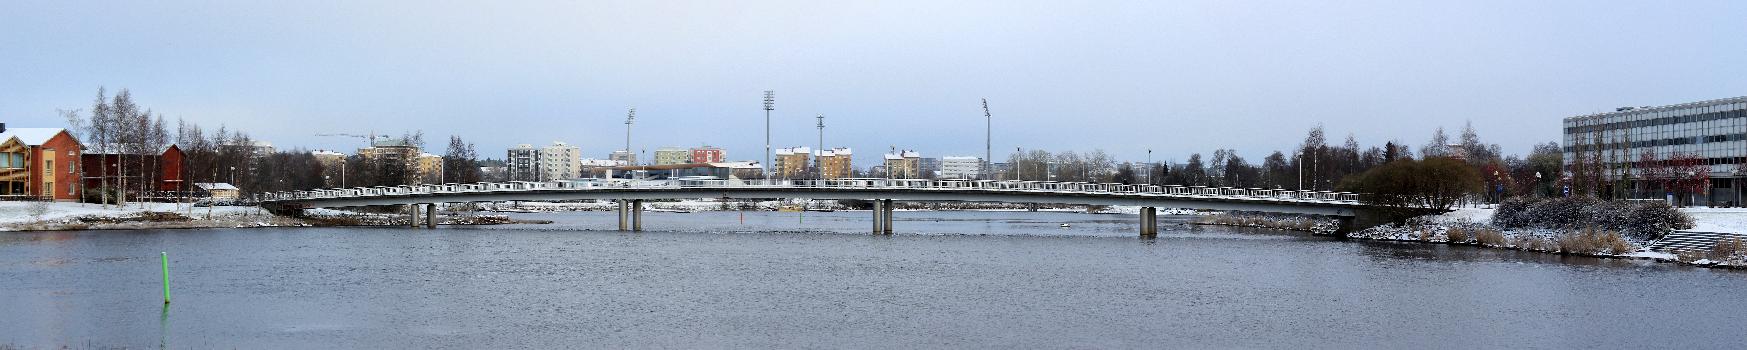 Panoramic view of the Pikisaarensilta bridge in Oulu